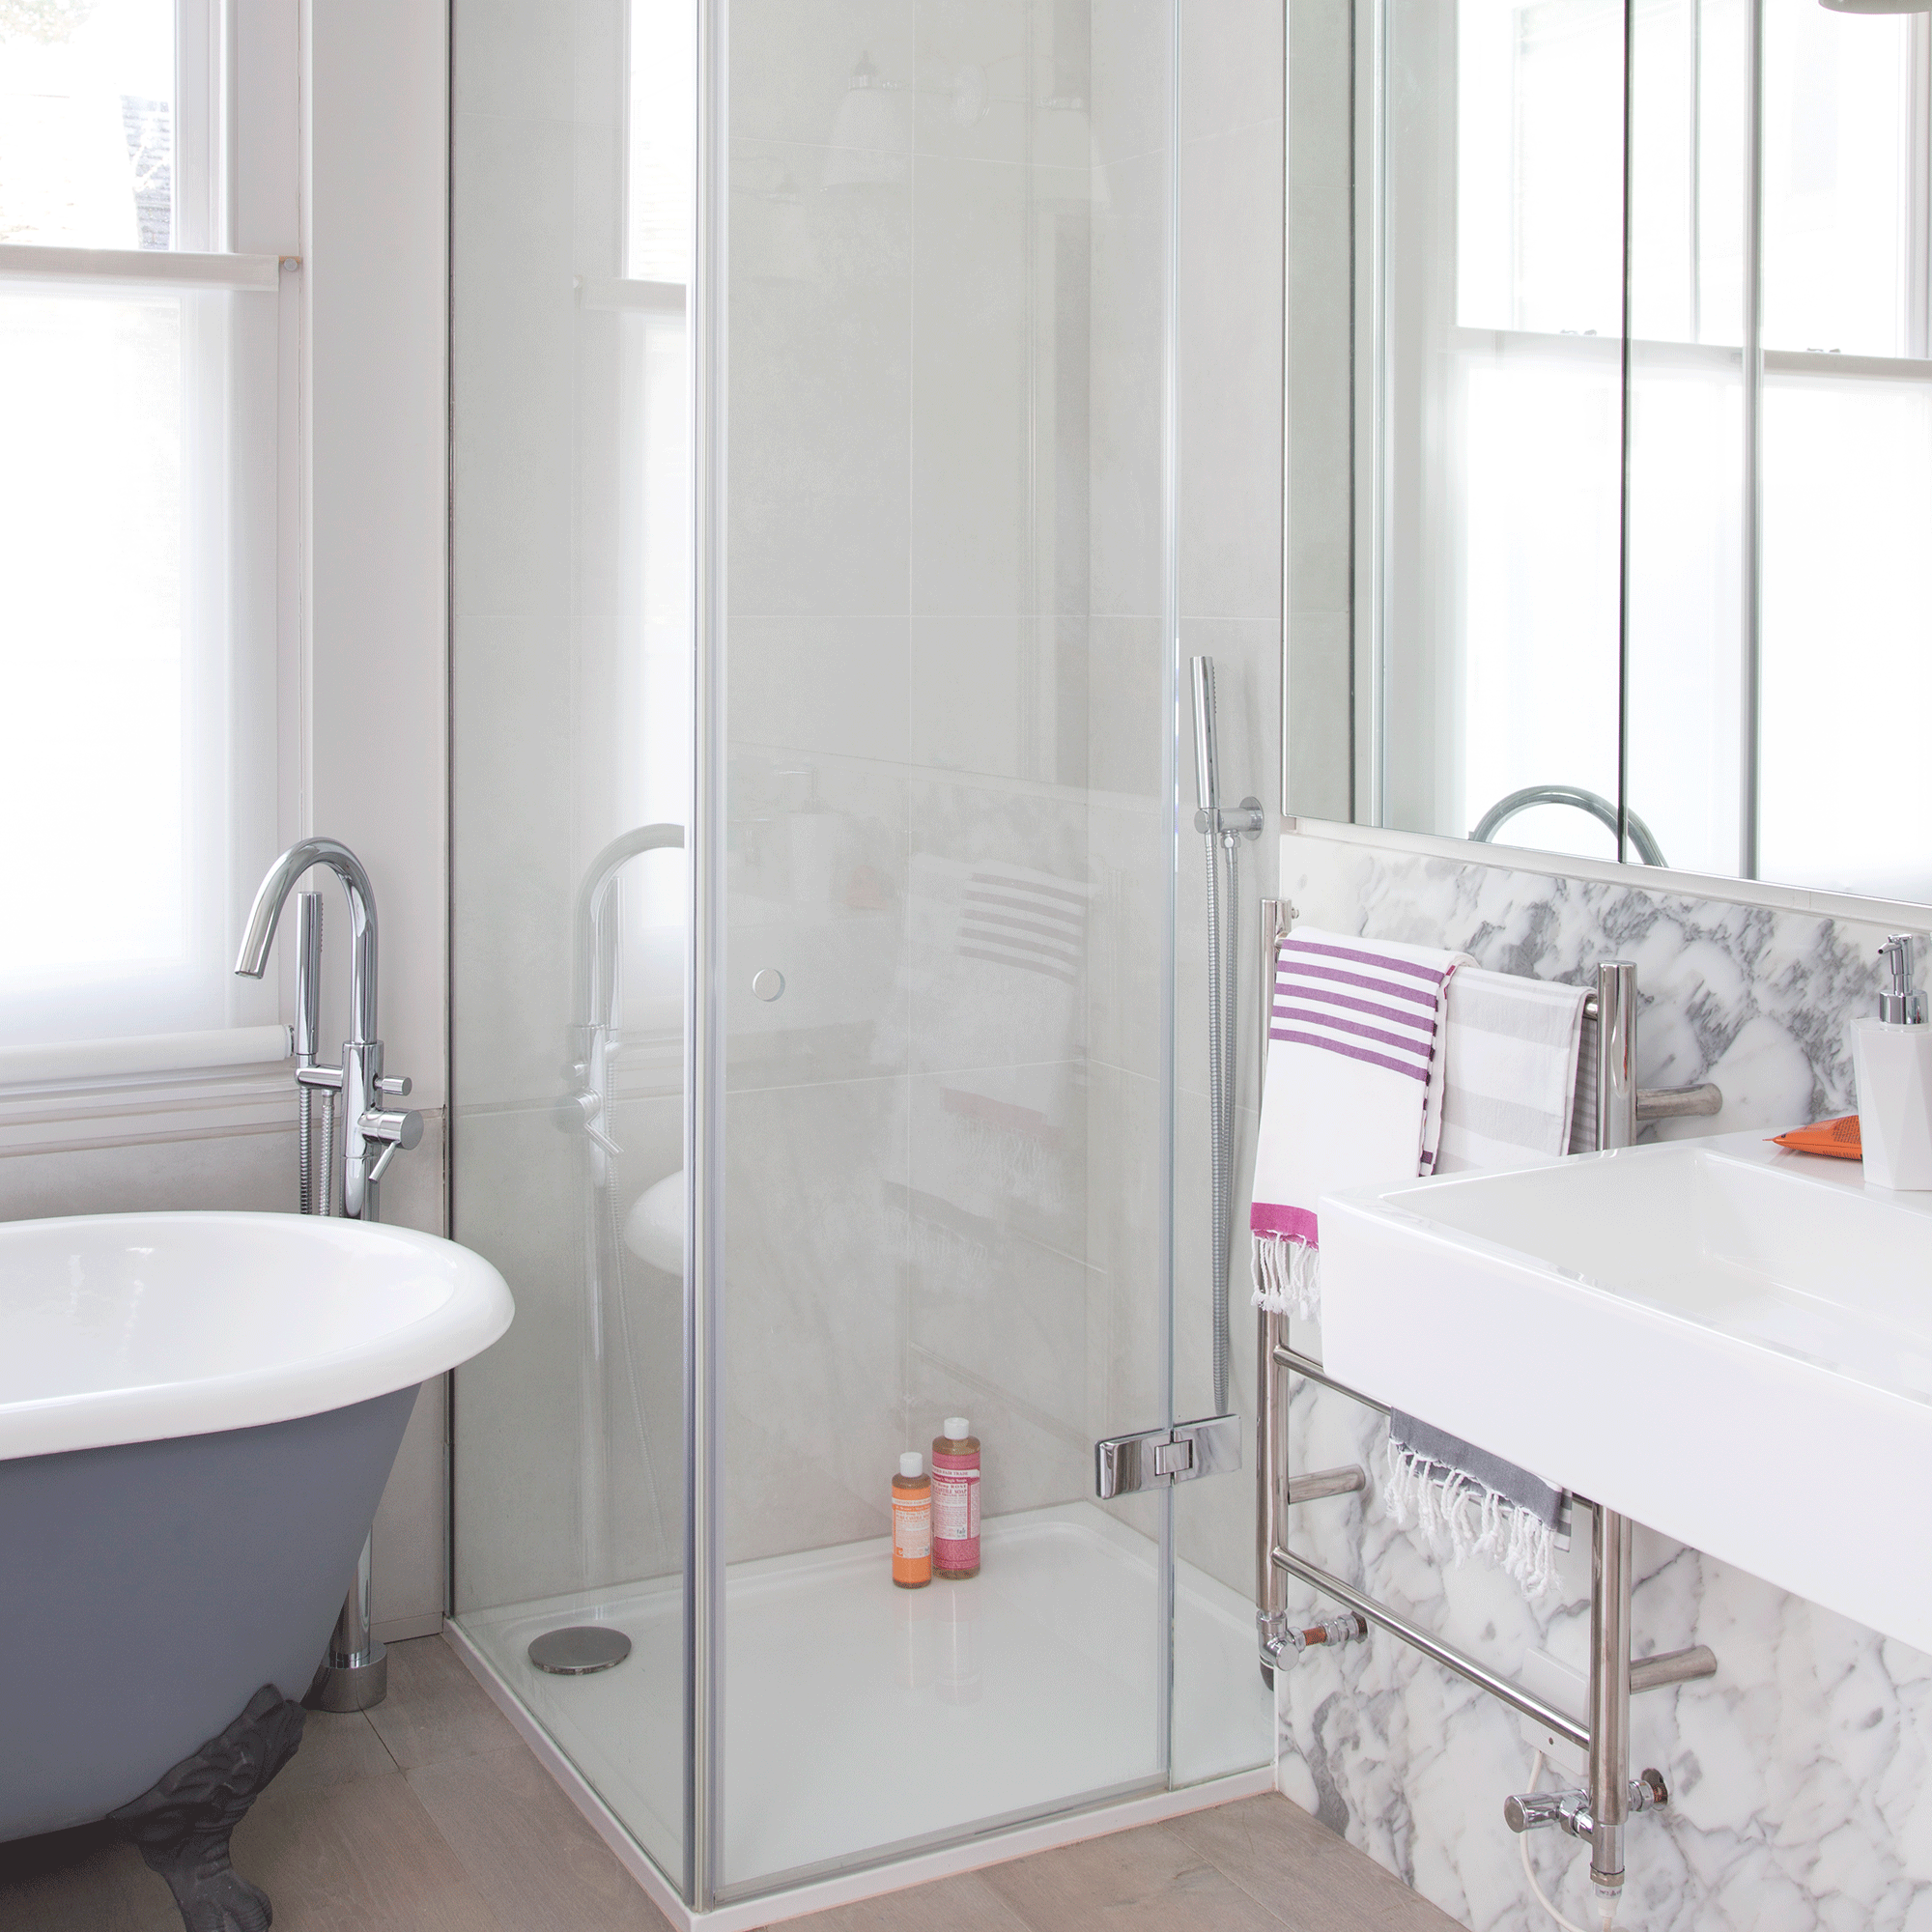 White bathroom with chrome fixtures